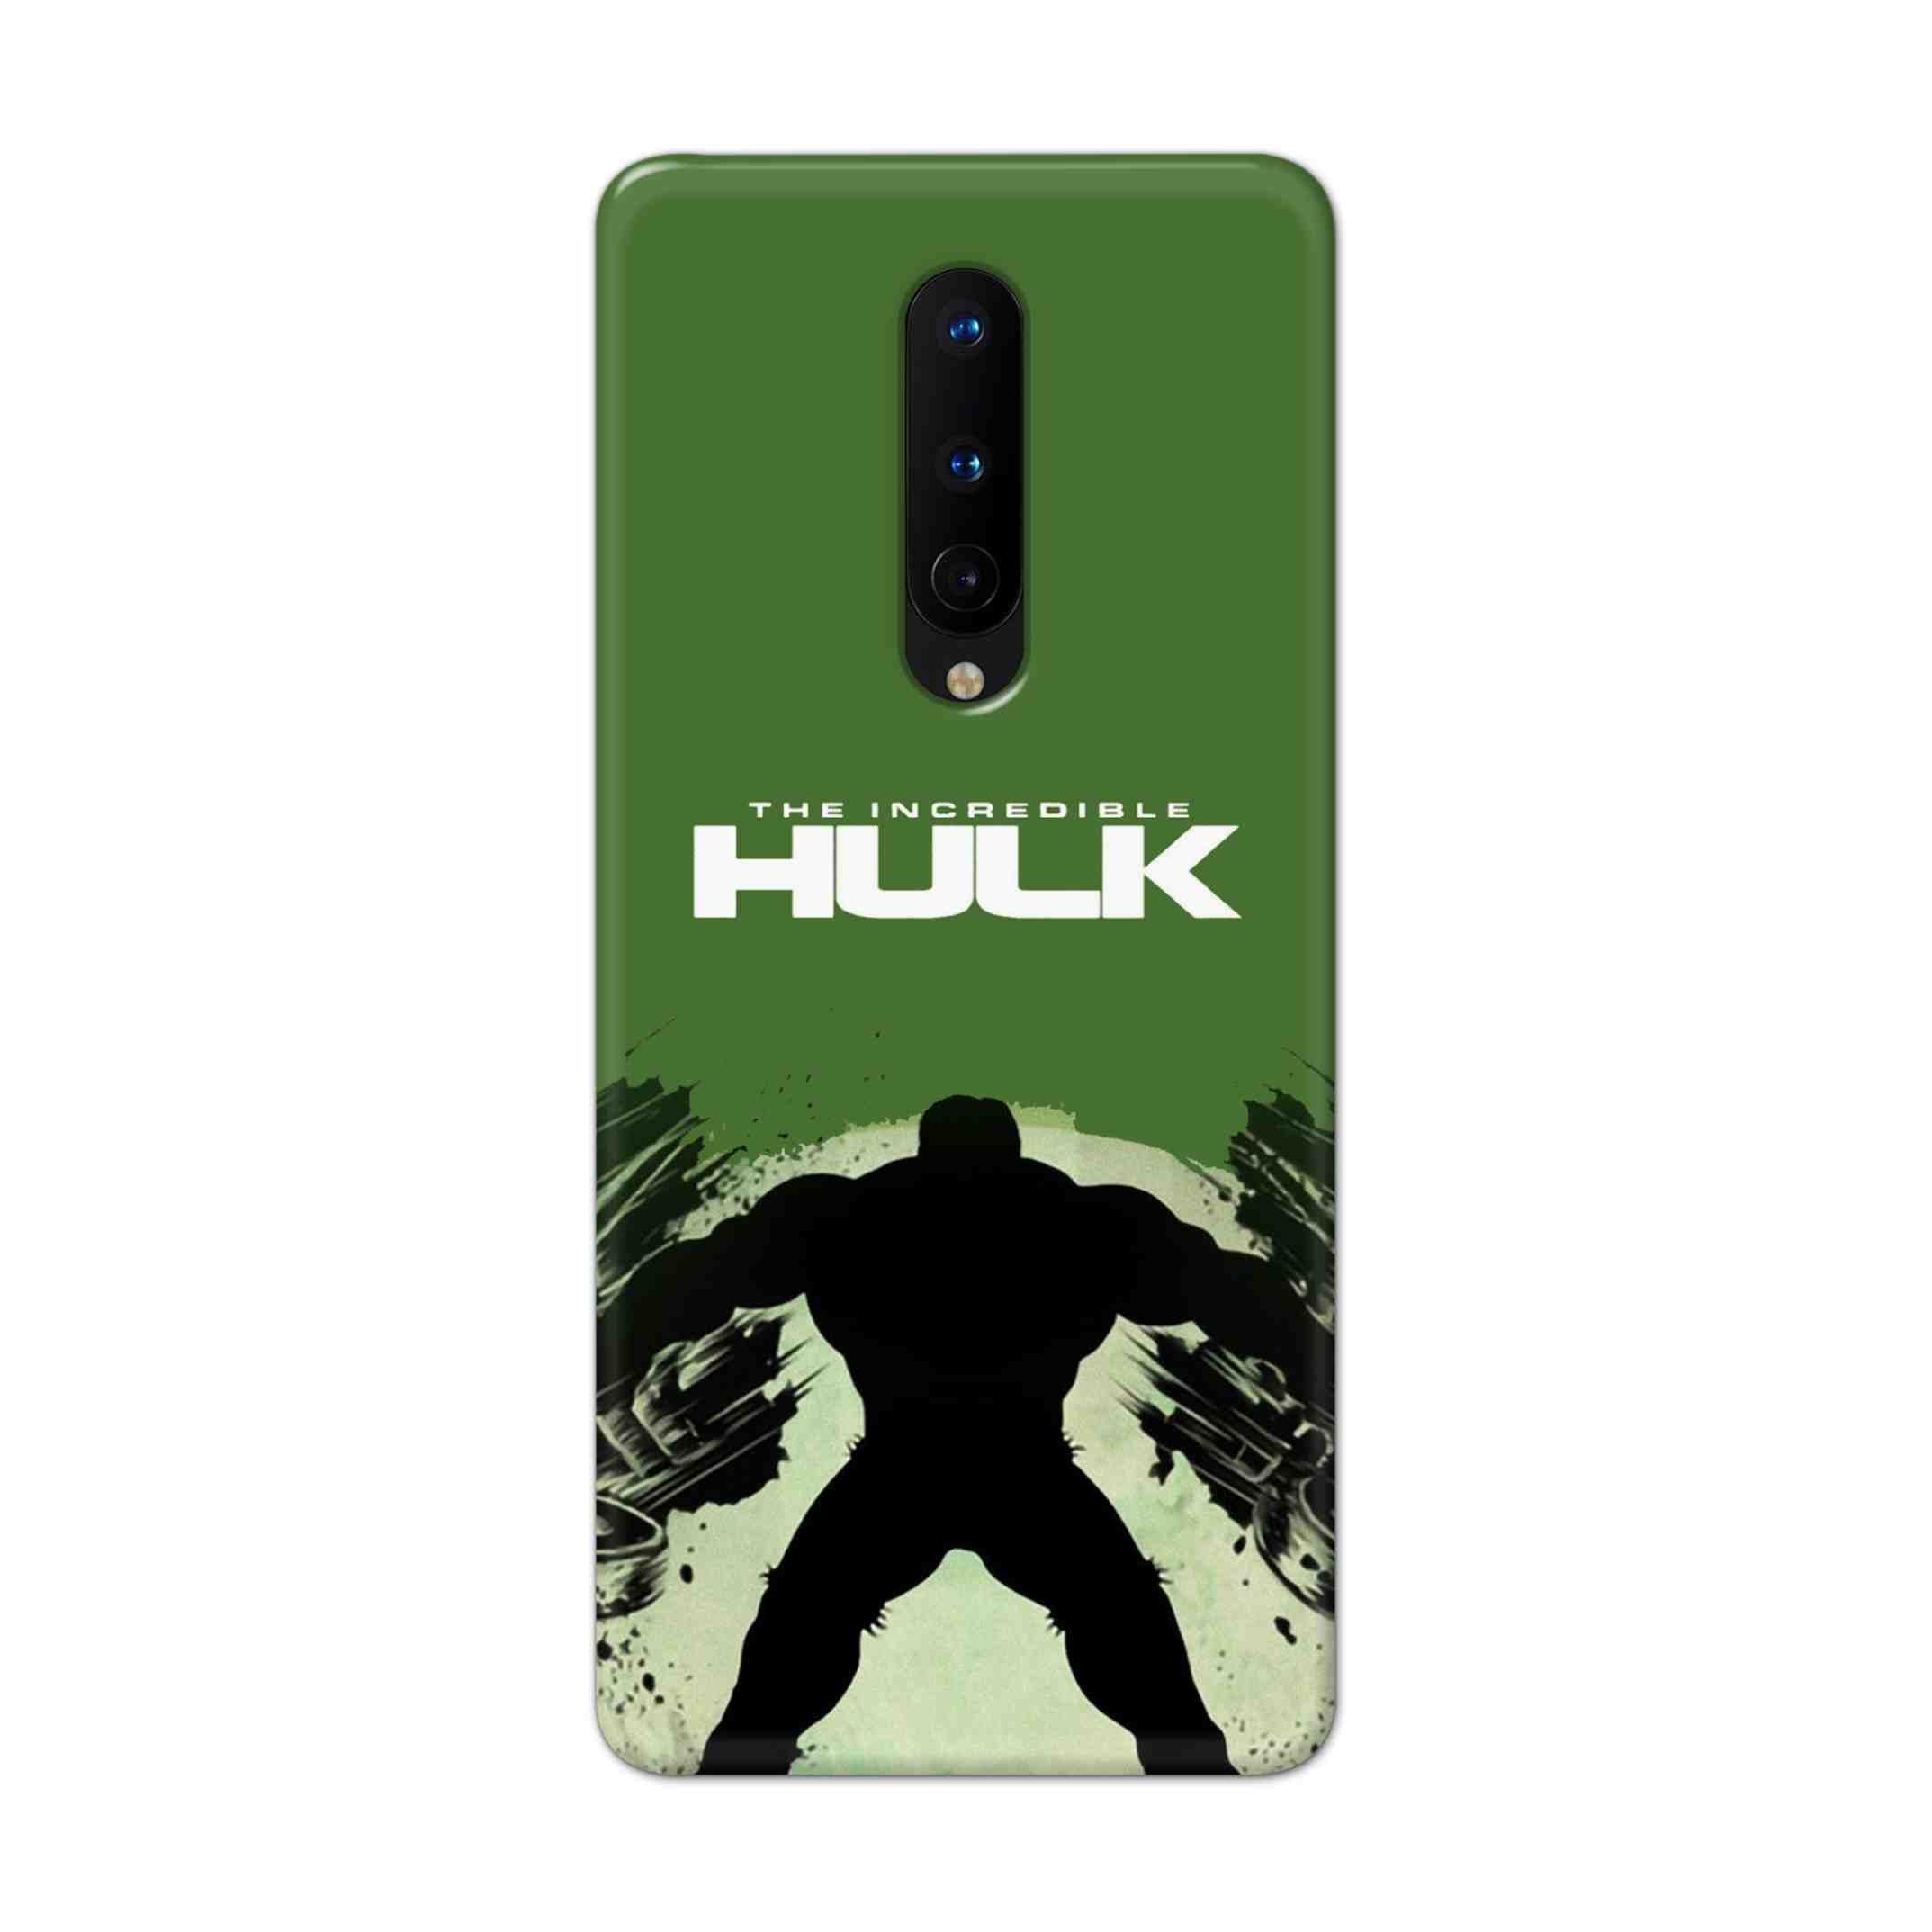 Buy Hulk Hard Back Mobile Phone Case Cover For OnePlus 8 Online